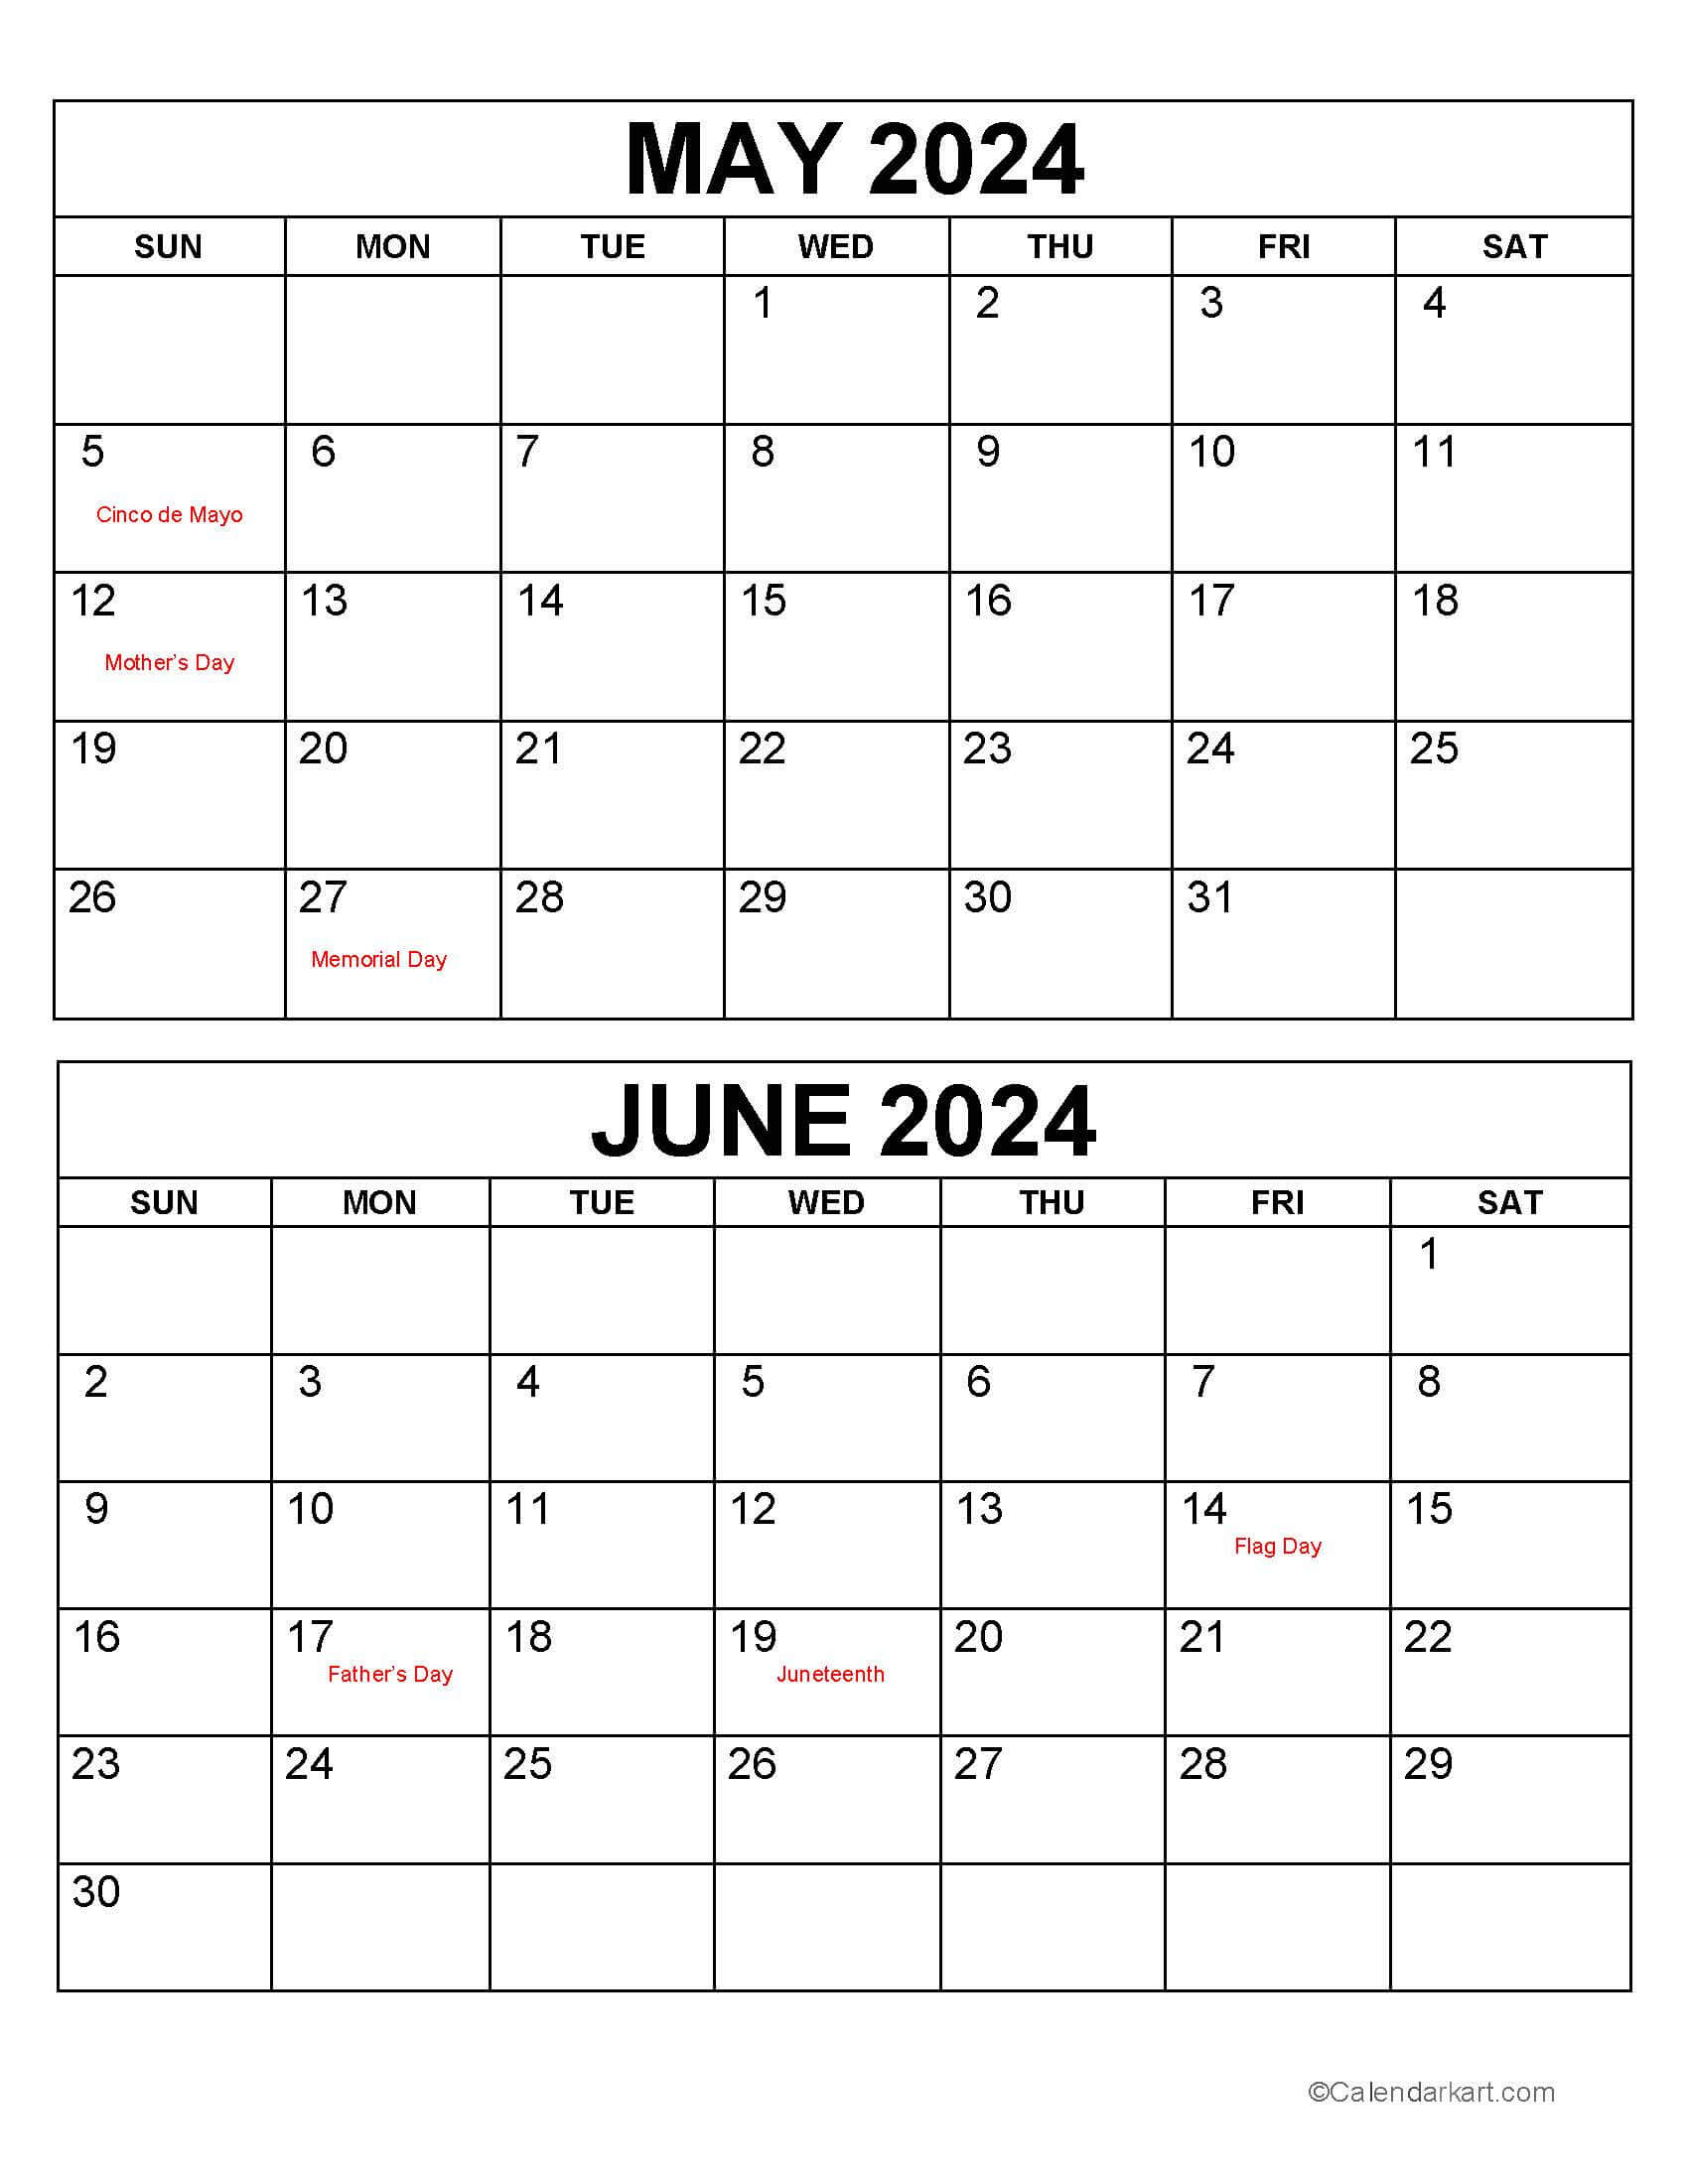 May June 2024 Calendars (3Rd Bi-Monthly) - Calendarkart throughout Calendar May And June 2024